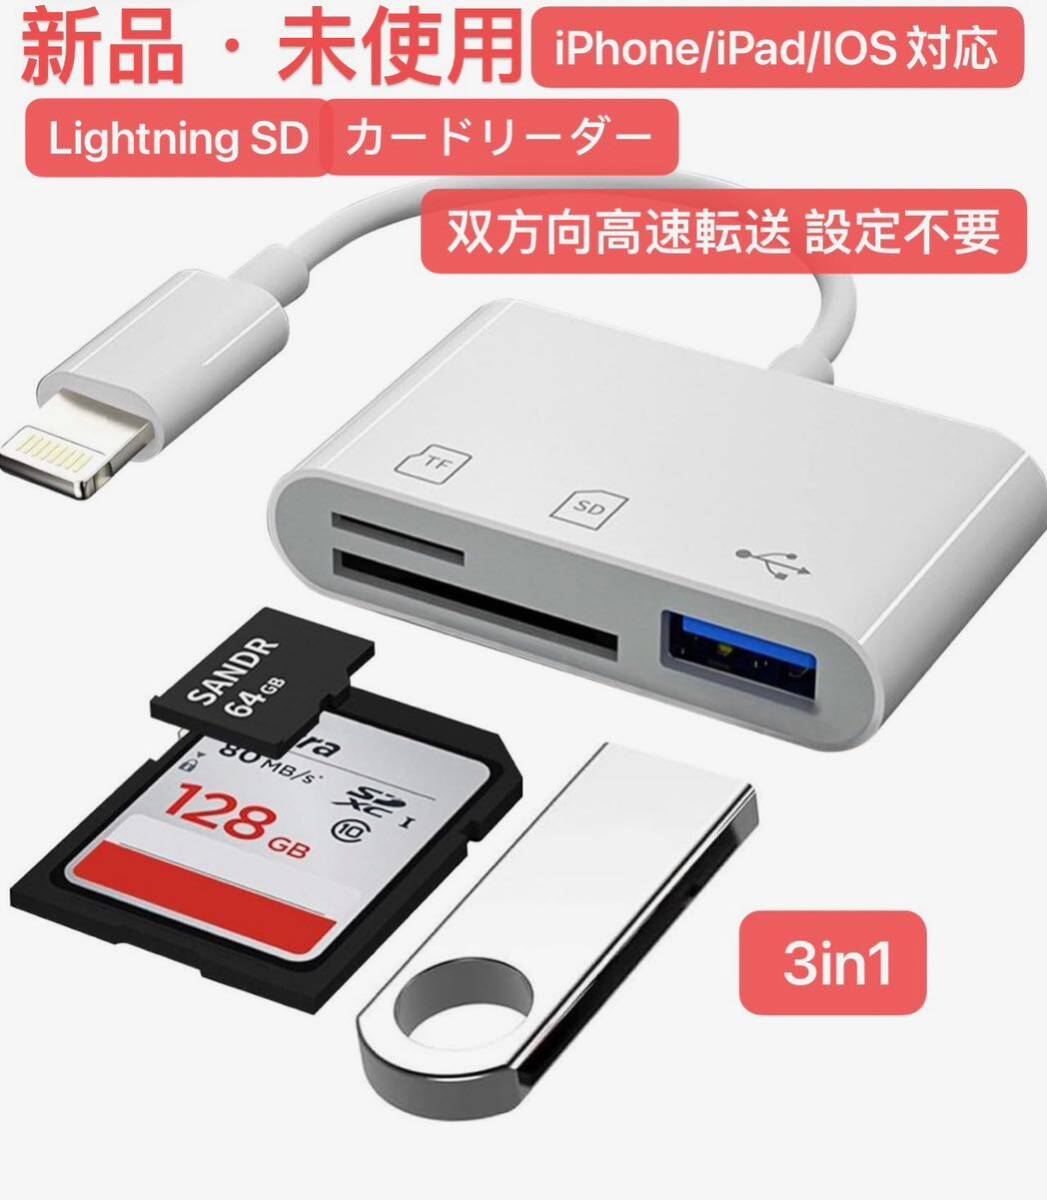 3in1 ライトニング SDカードカメラリーダー メモリカードリーダー Lighting to USBアダプタ SDカード/TFカード/USB3.0 OTG機能読み書き同時_画像1